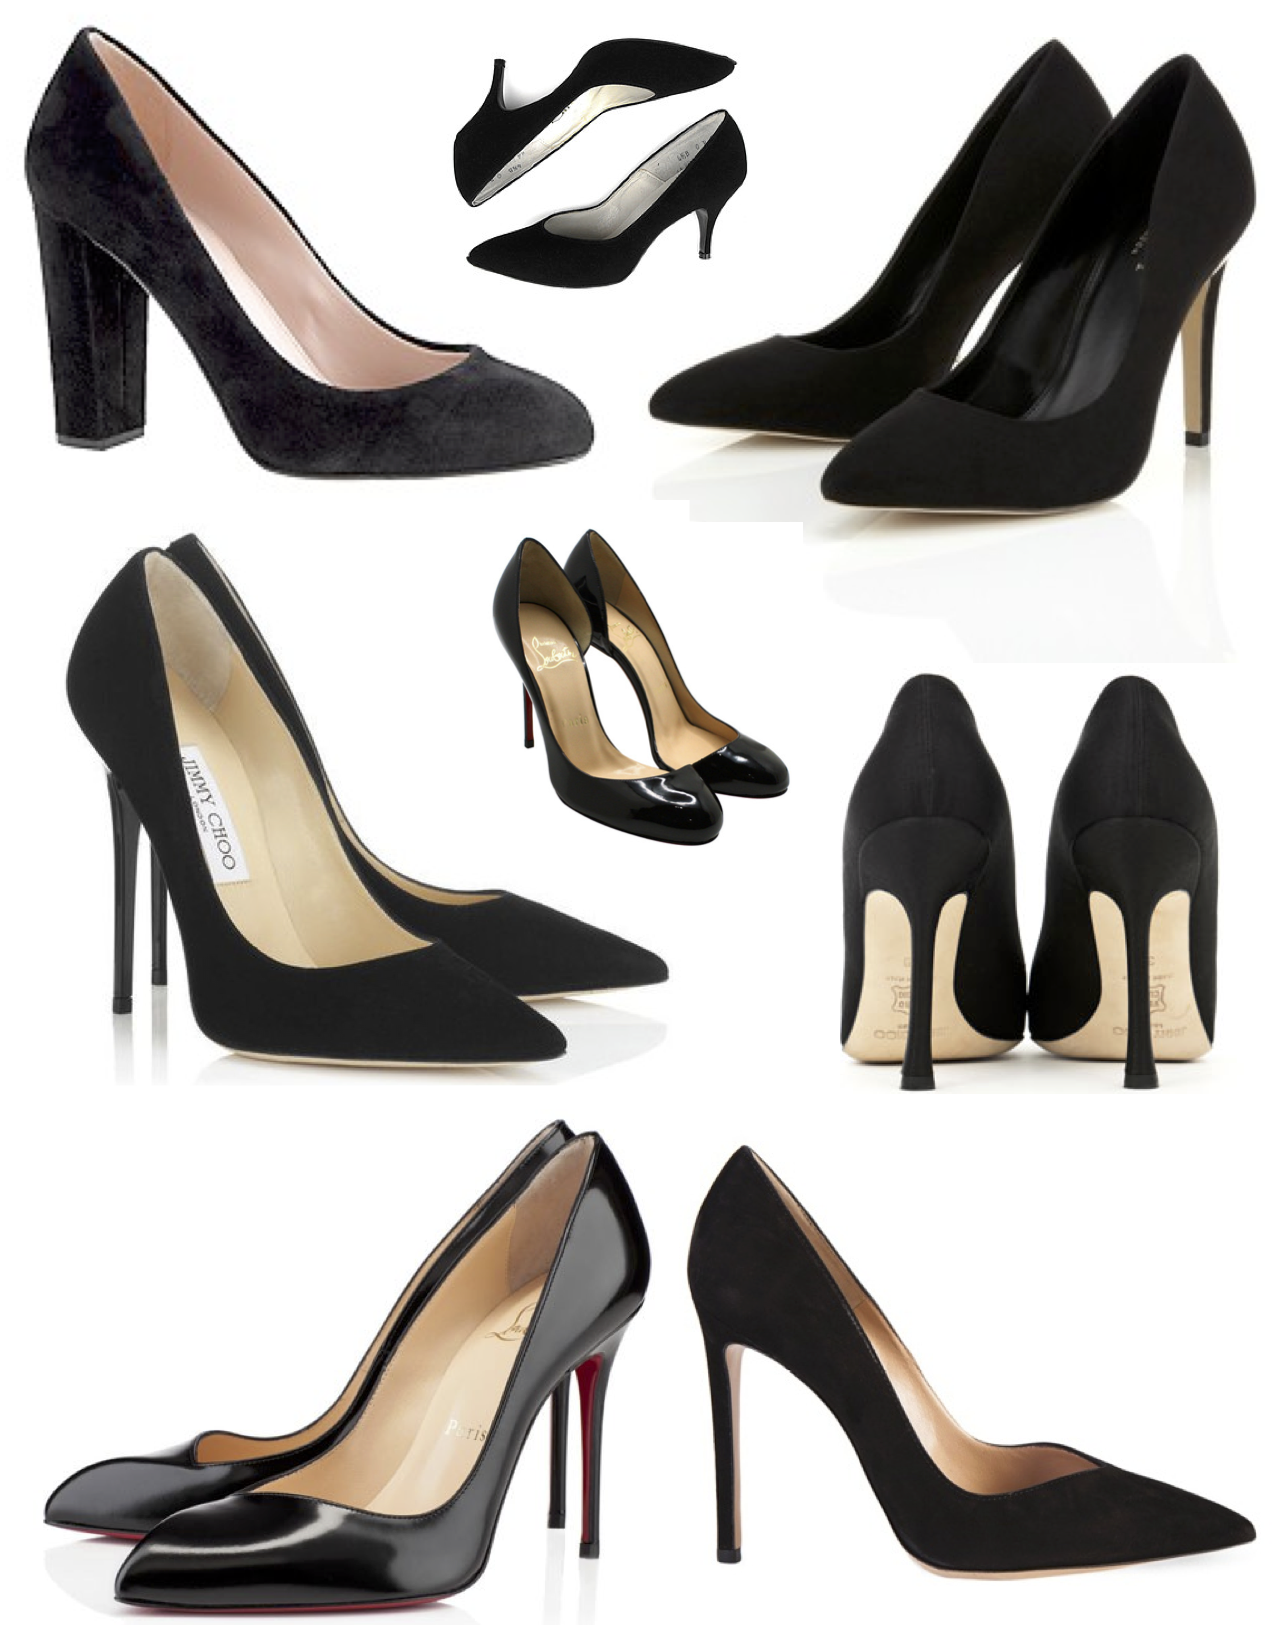 classic black high heels